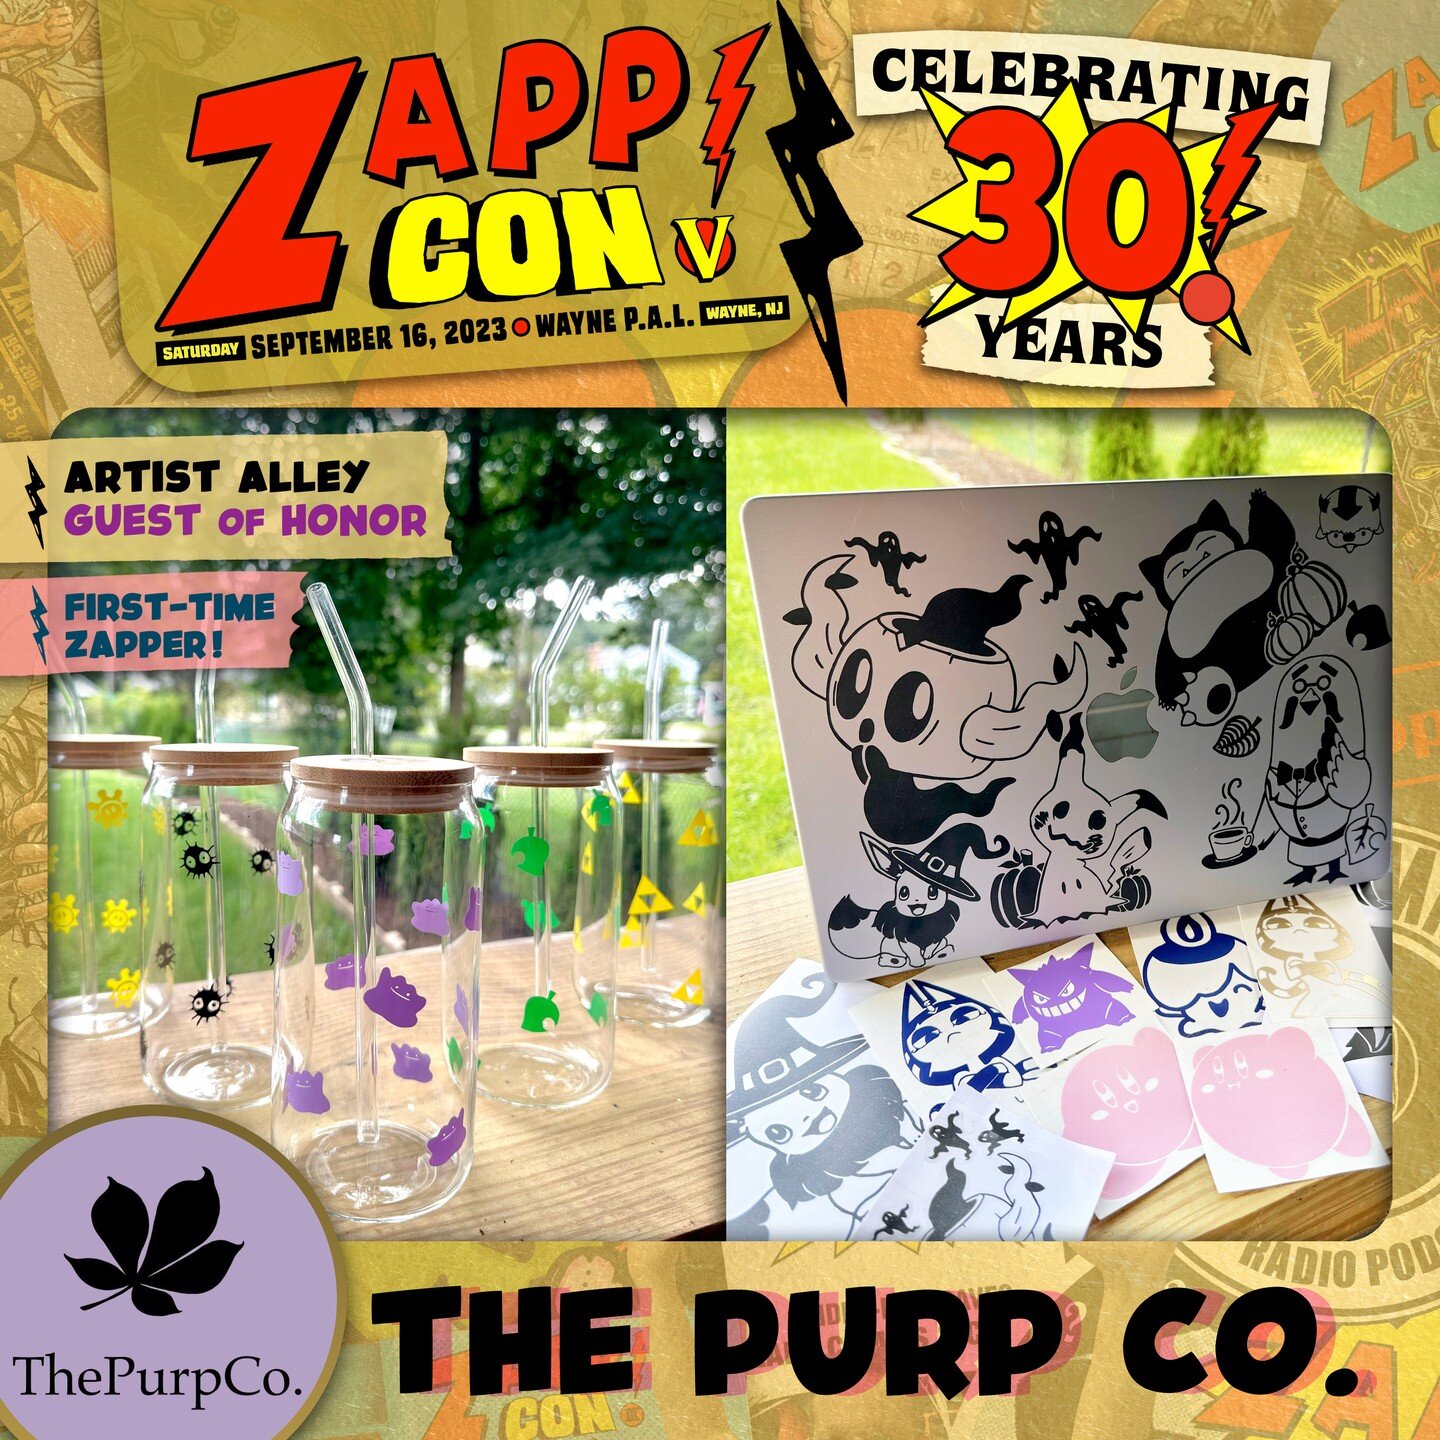 Get custom nerdwares from @thepurpco at Zapp Con 5!!

#zappcomics #zappcon #zappconnj #zappcon5 #metal #comics #comicbooks #comicart #comicartist #njevents #comiccon #waynenj #marvel #dc #artistalley #panels #thepurpco #cr33pyllc #pokemon